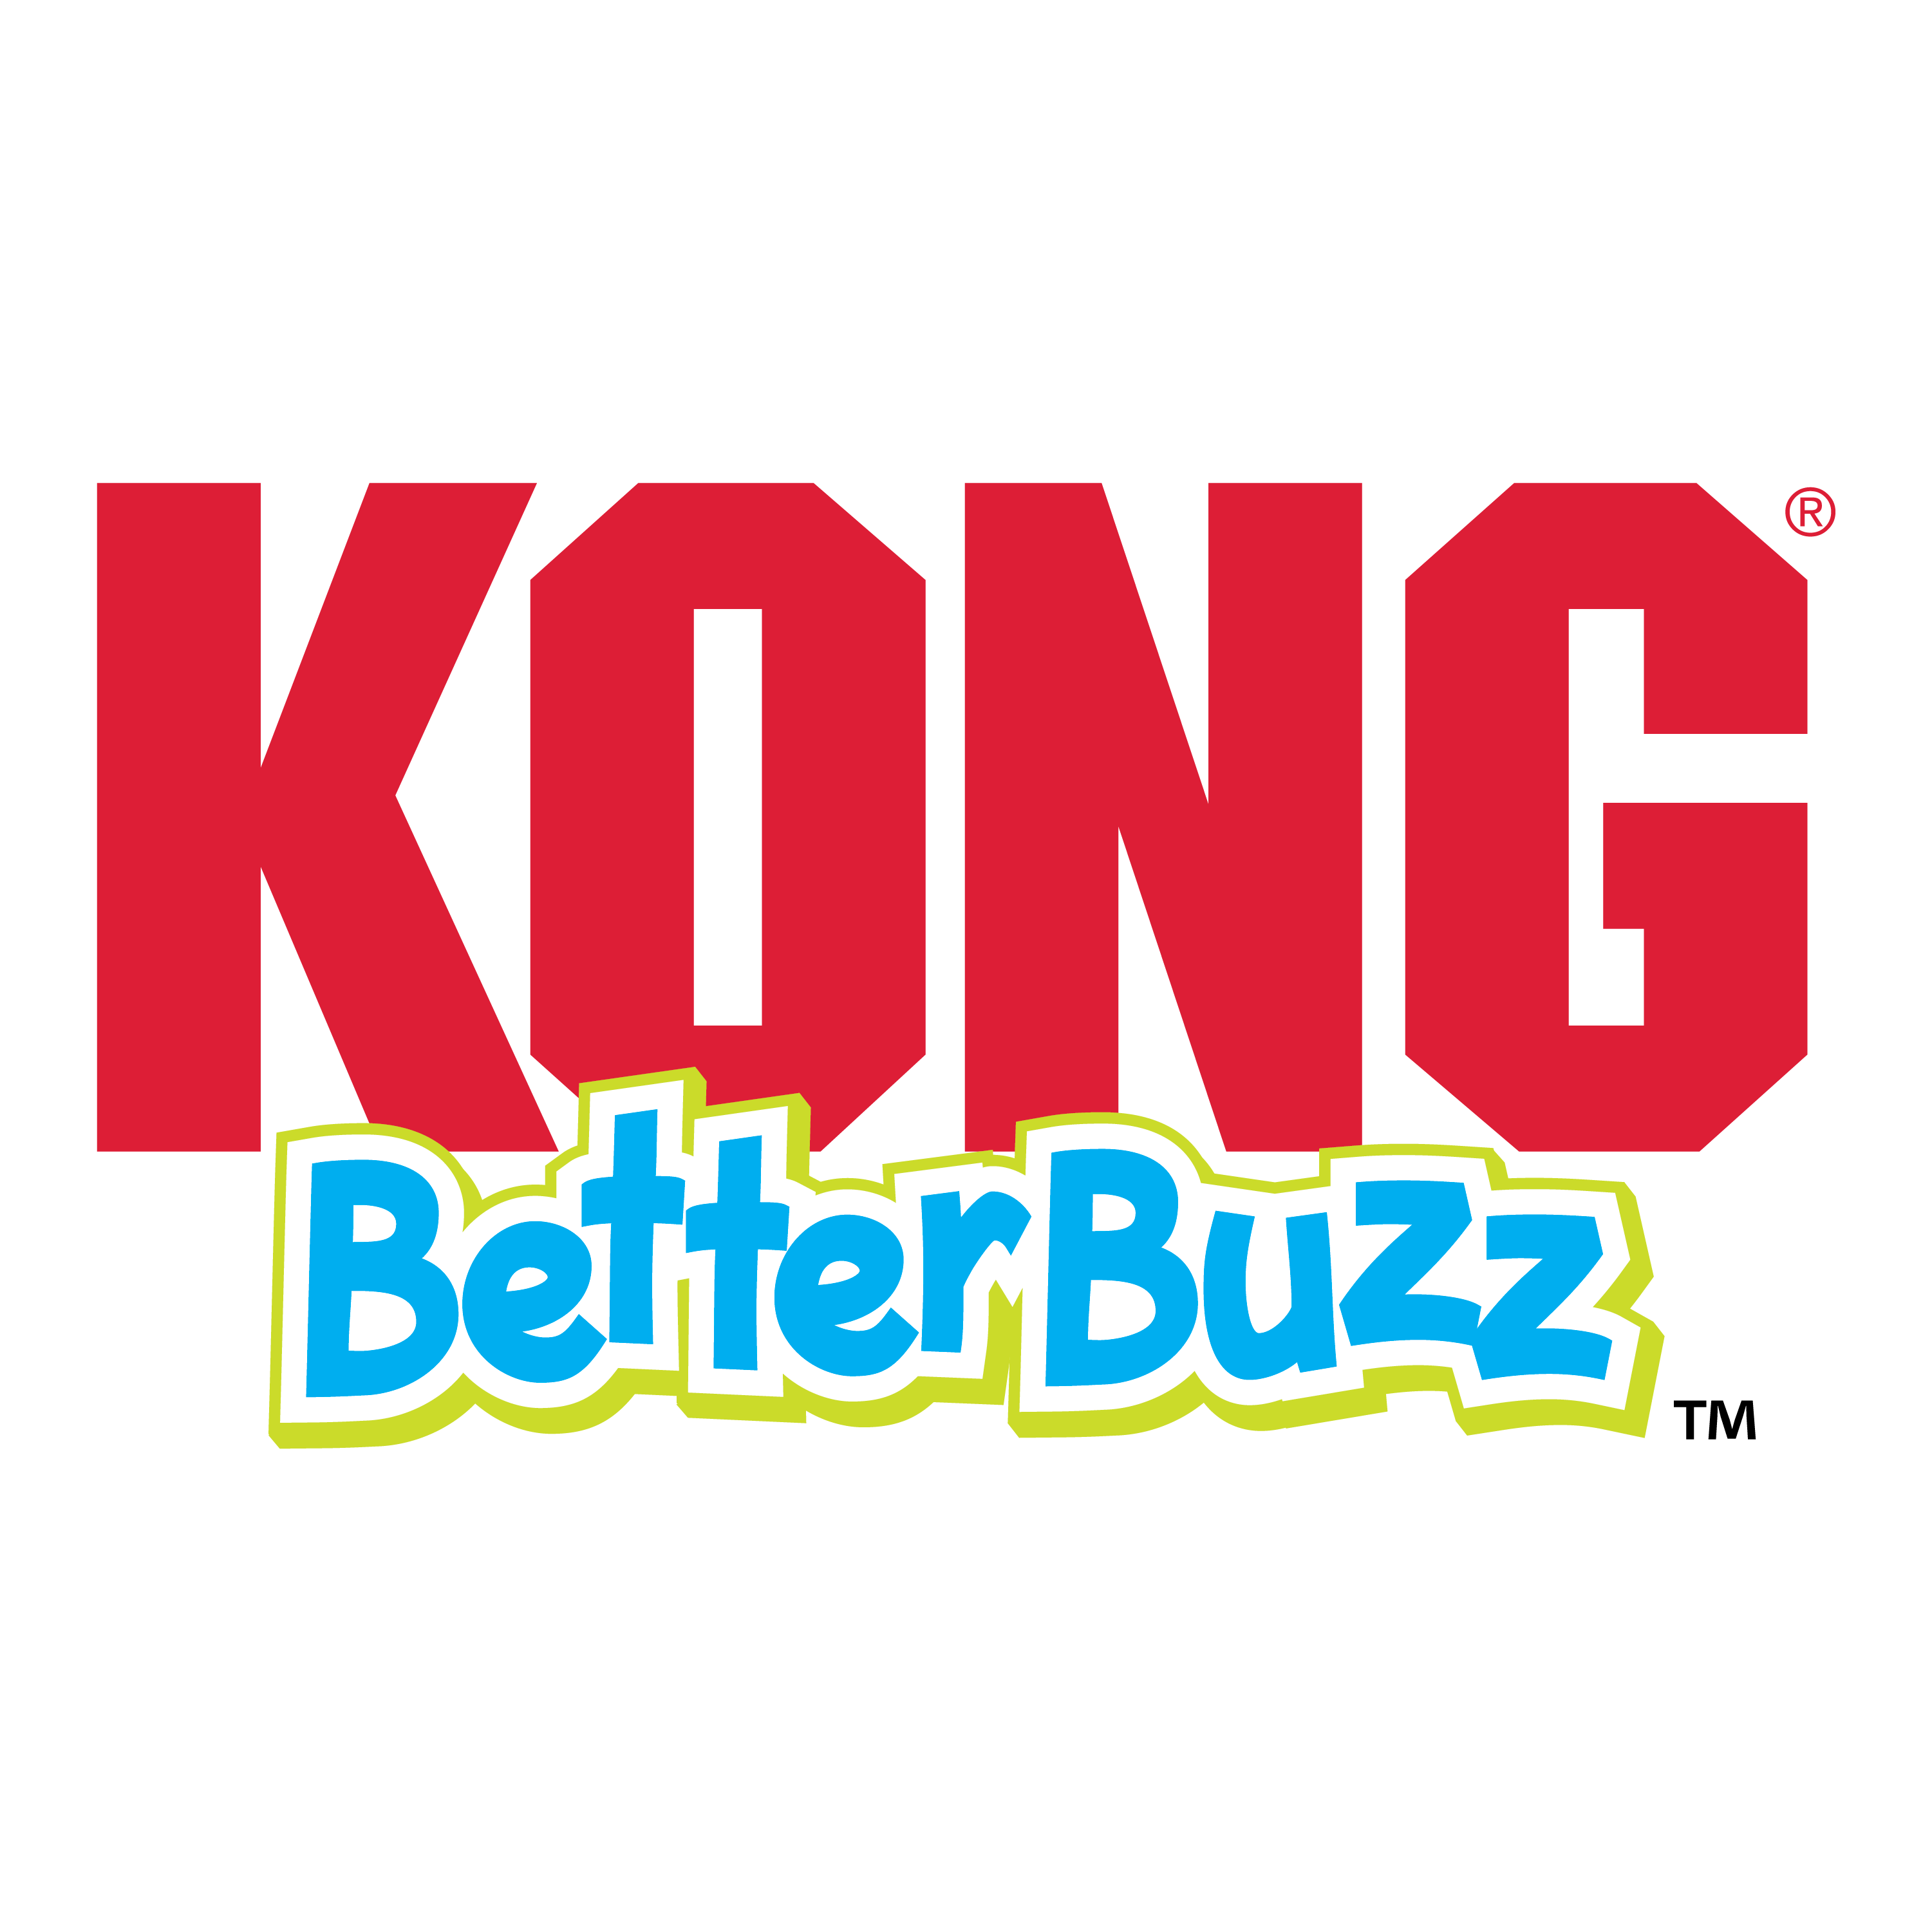 Better Buzz Banana alt1 product image